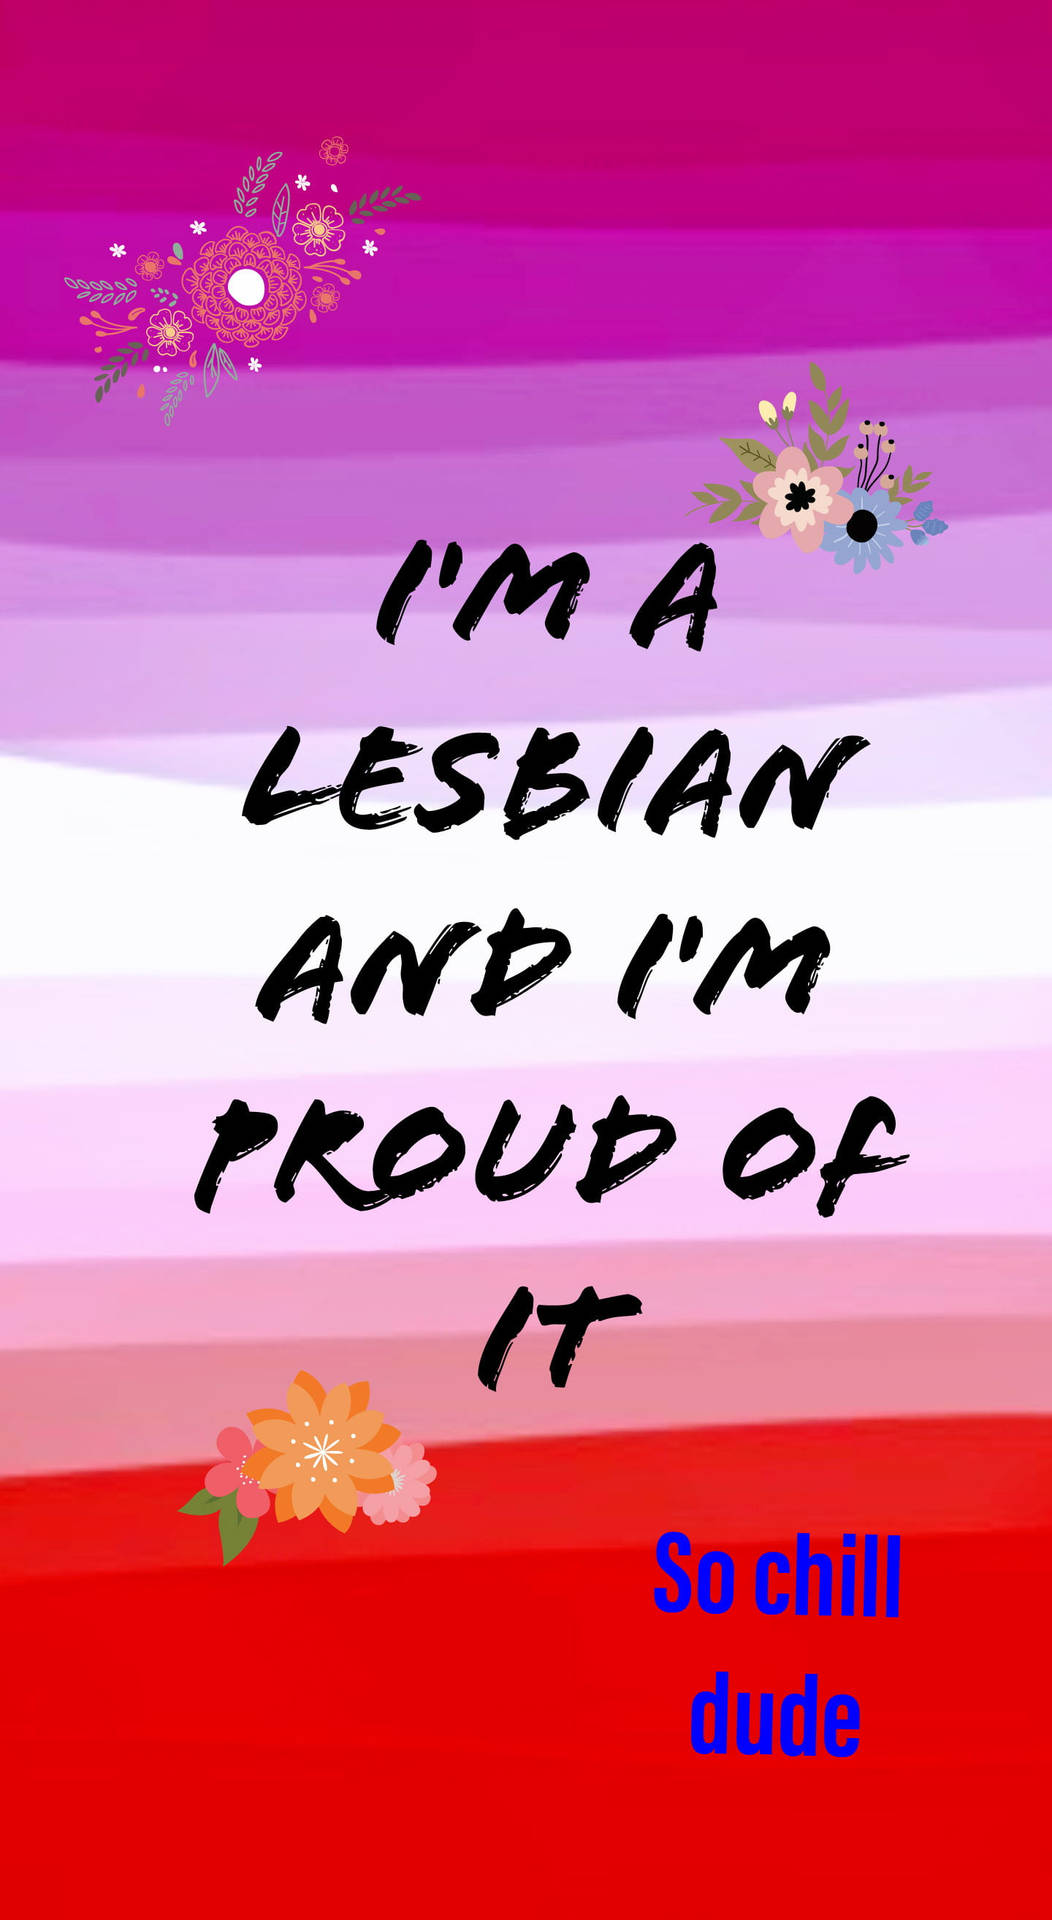 Lesbian pride wallpaper hd